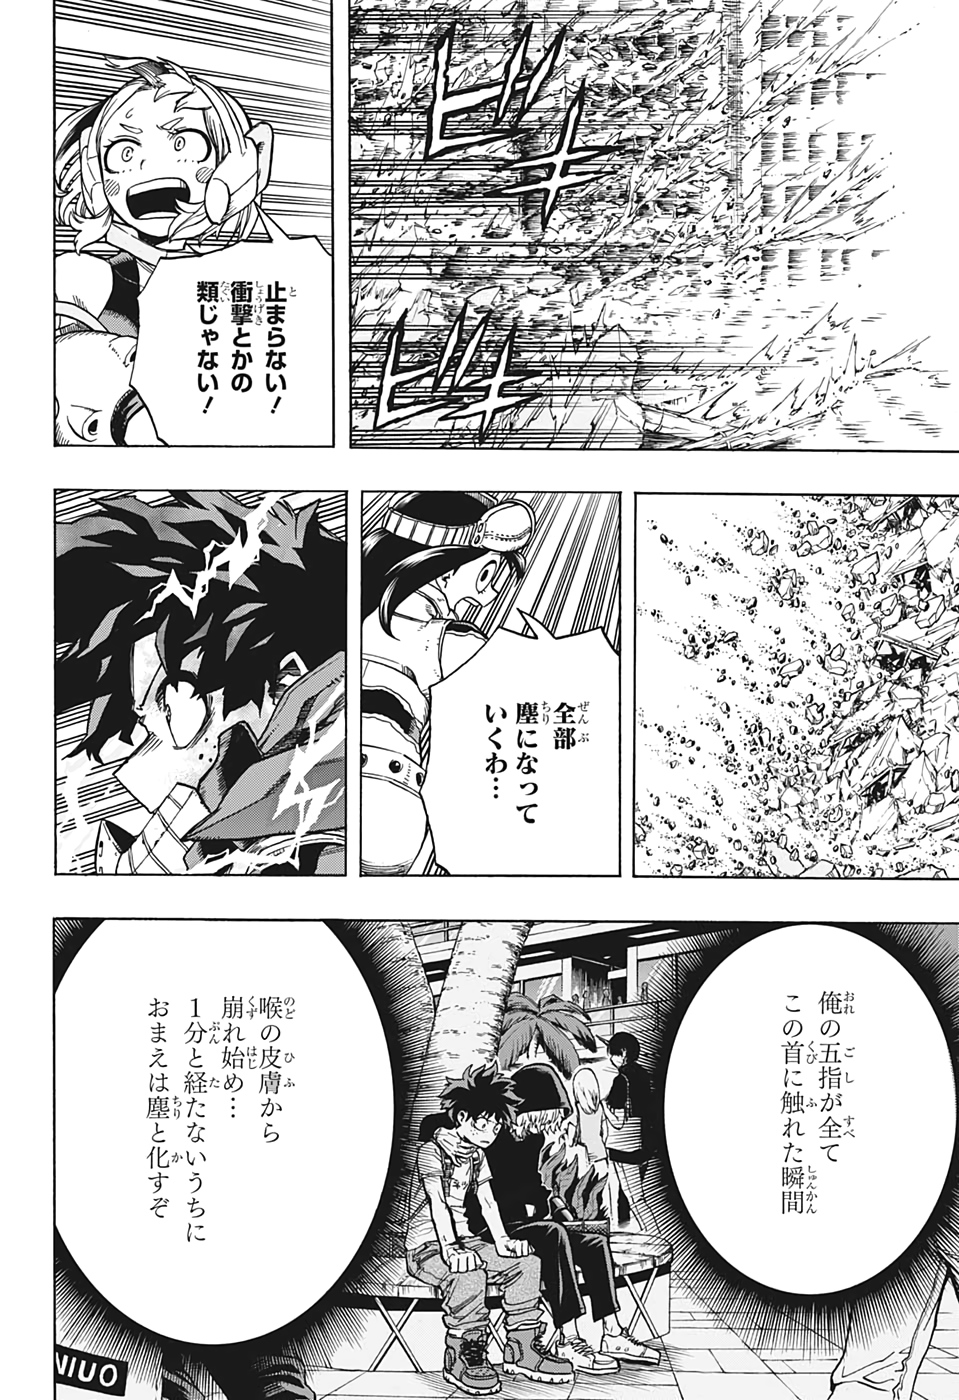 Boku no Hero Academia - Chapter 273 - Page 2